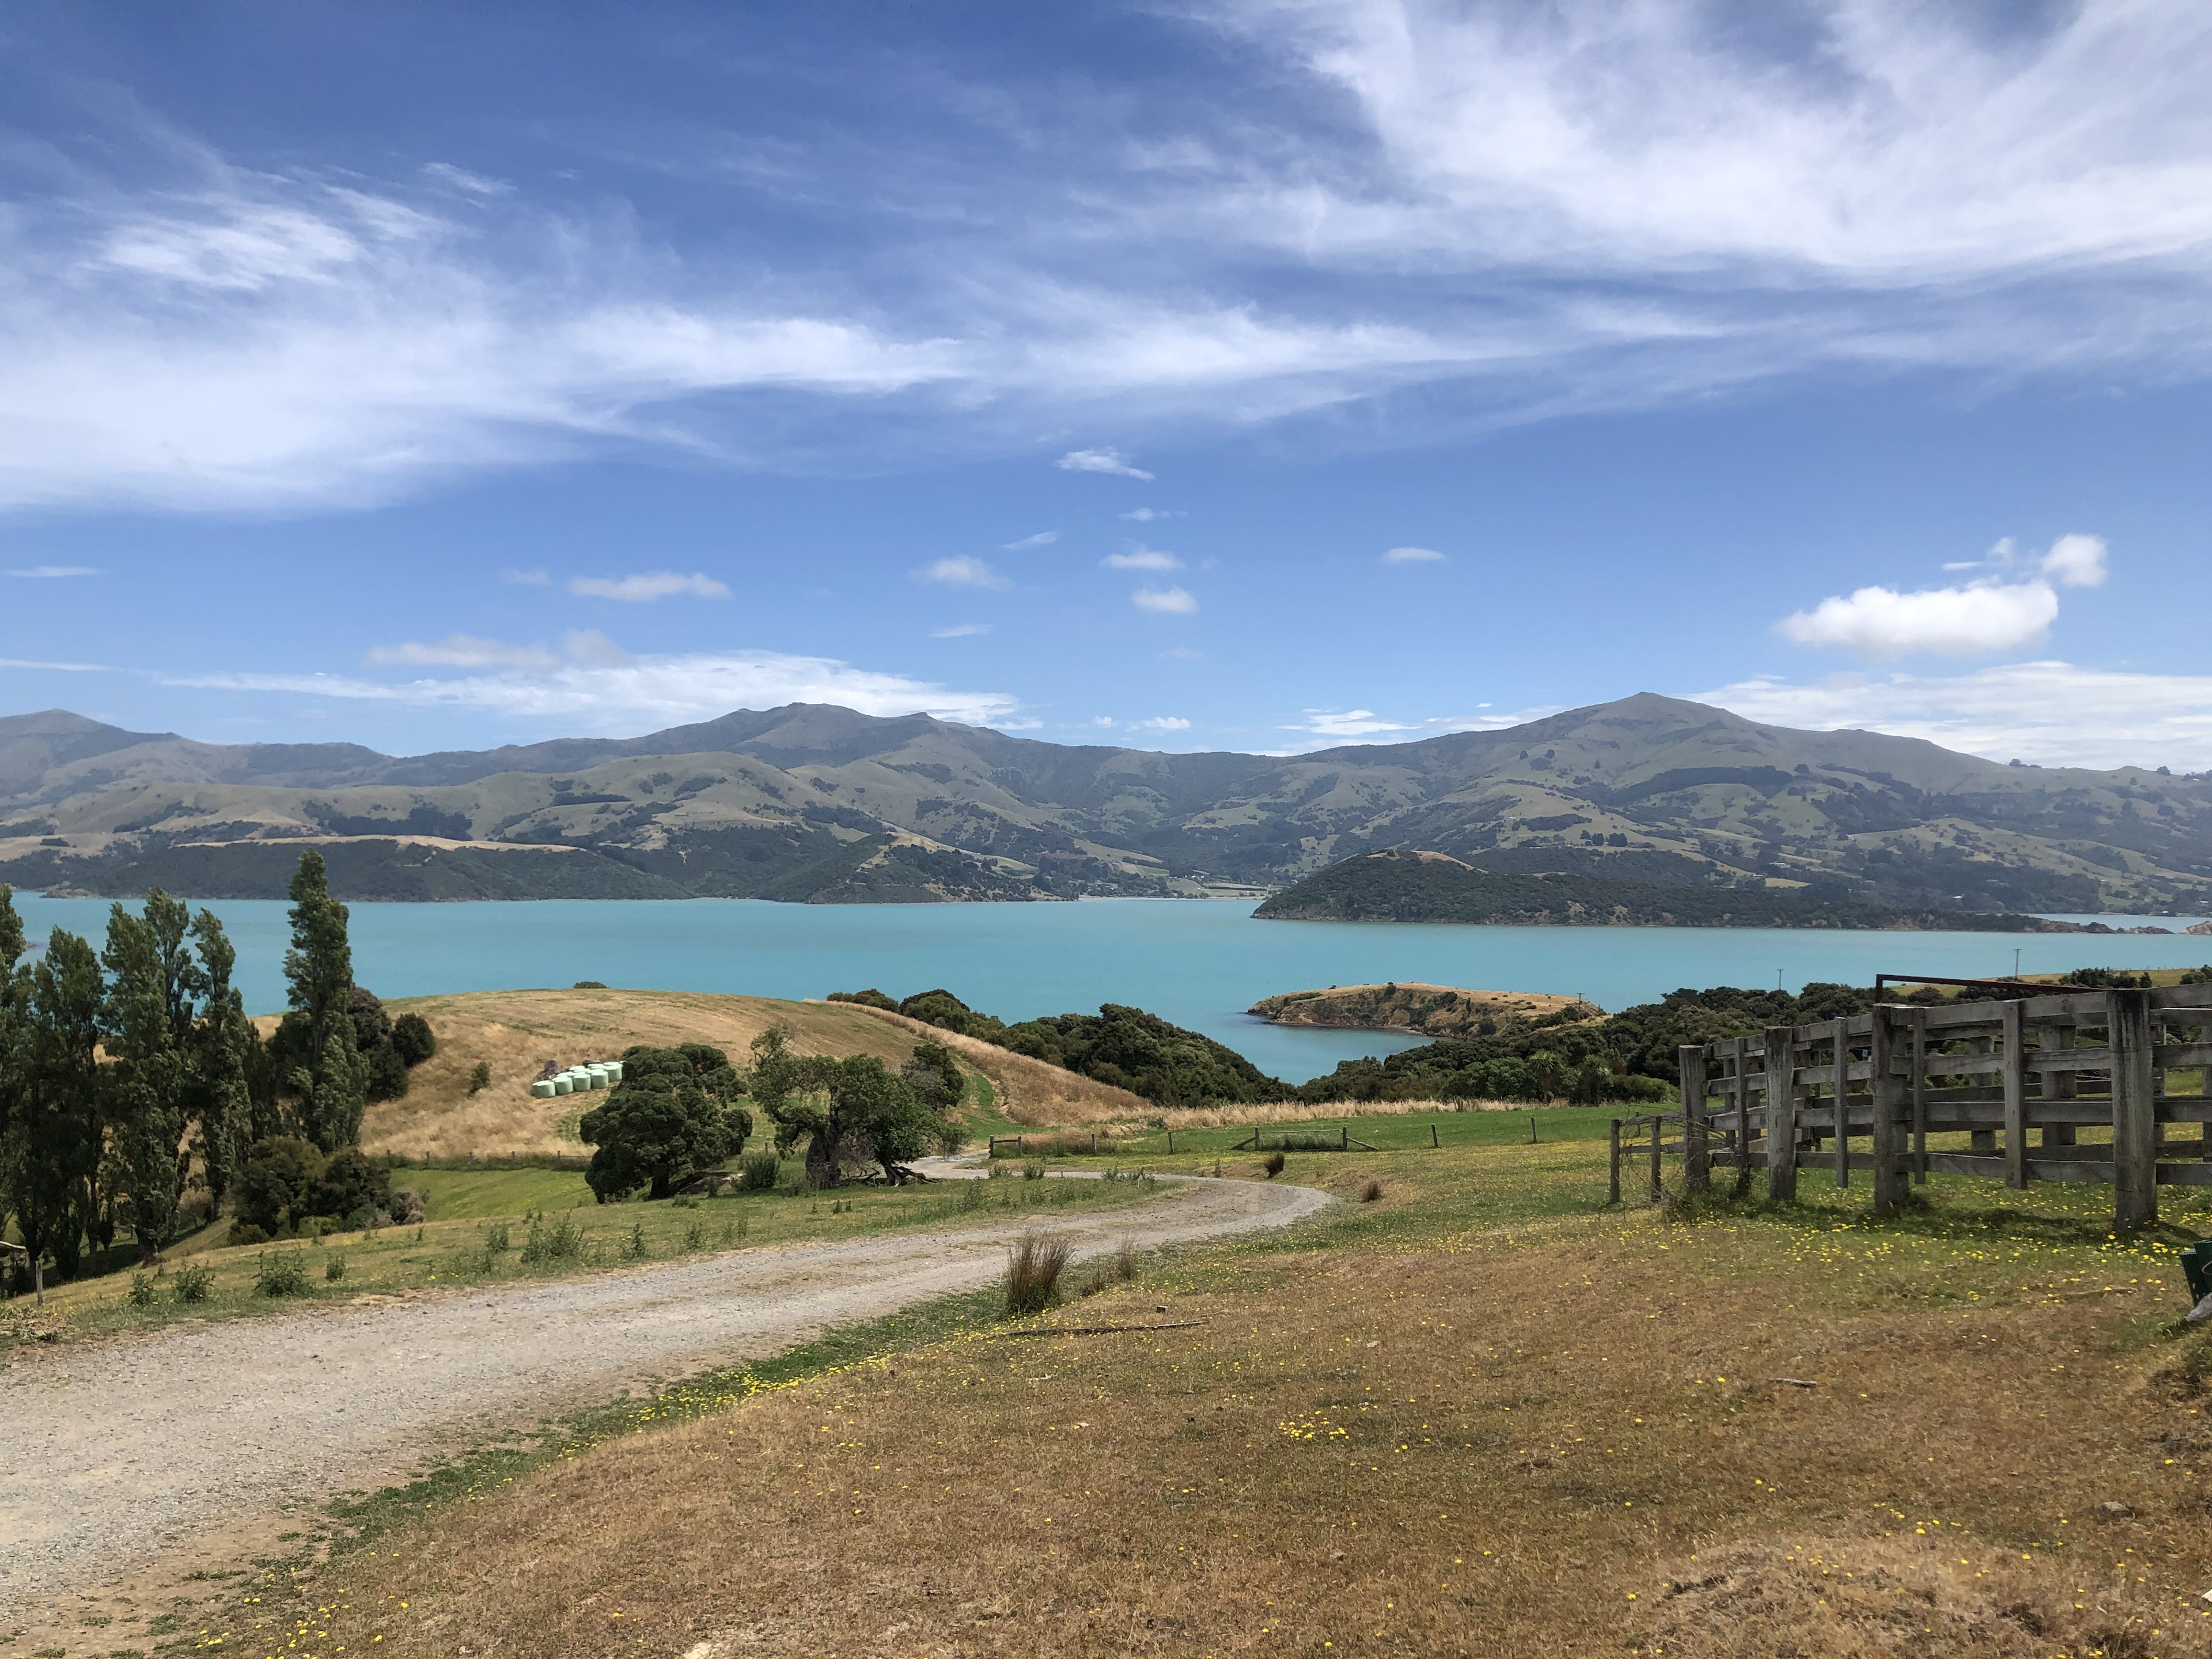 Back fresh into 2023 after a 'Positive-Summer' in NZ's beautiful Christchurch & Akaroa